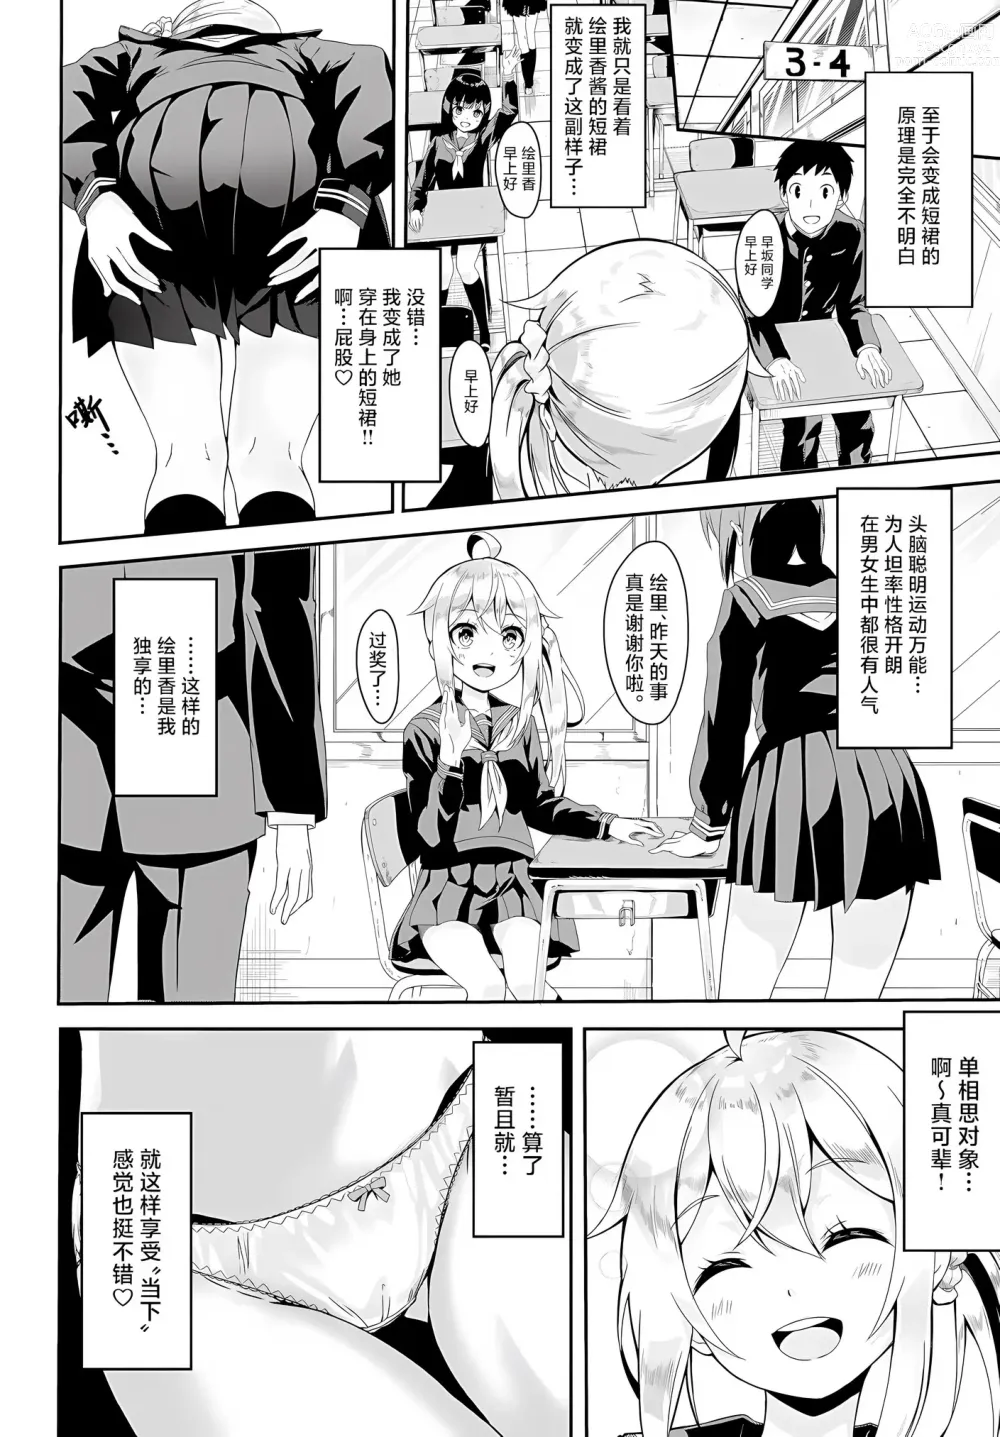 Page 4 of manga Skirt no Naka wa Fantastic!